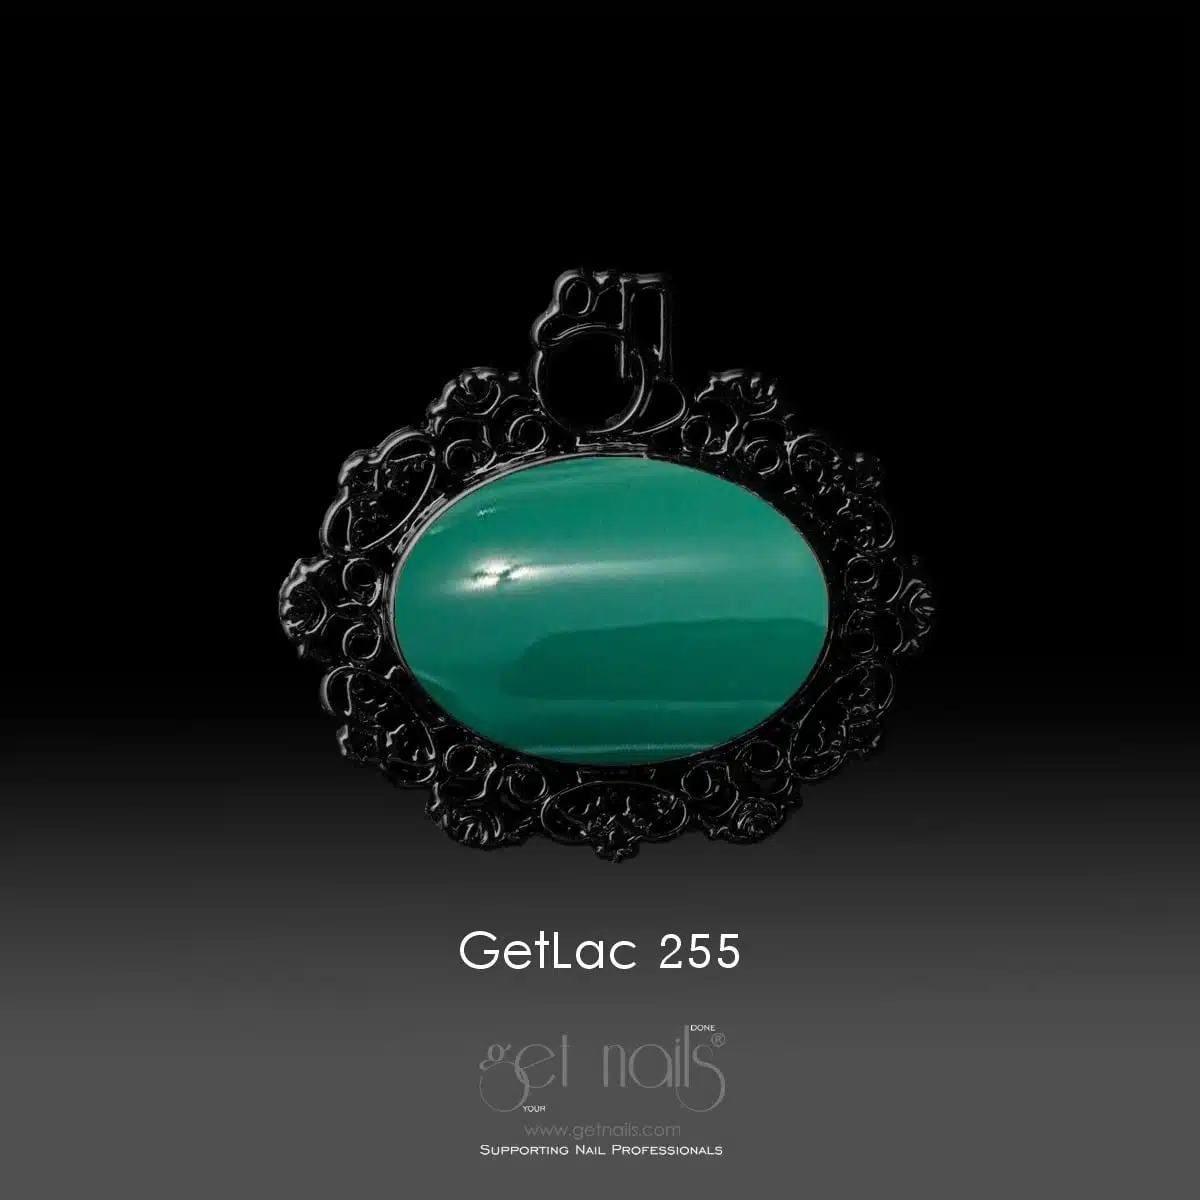 Get Nails Austria - GetLac 255 15g